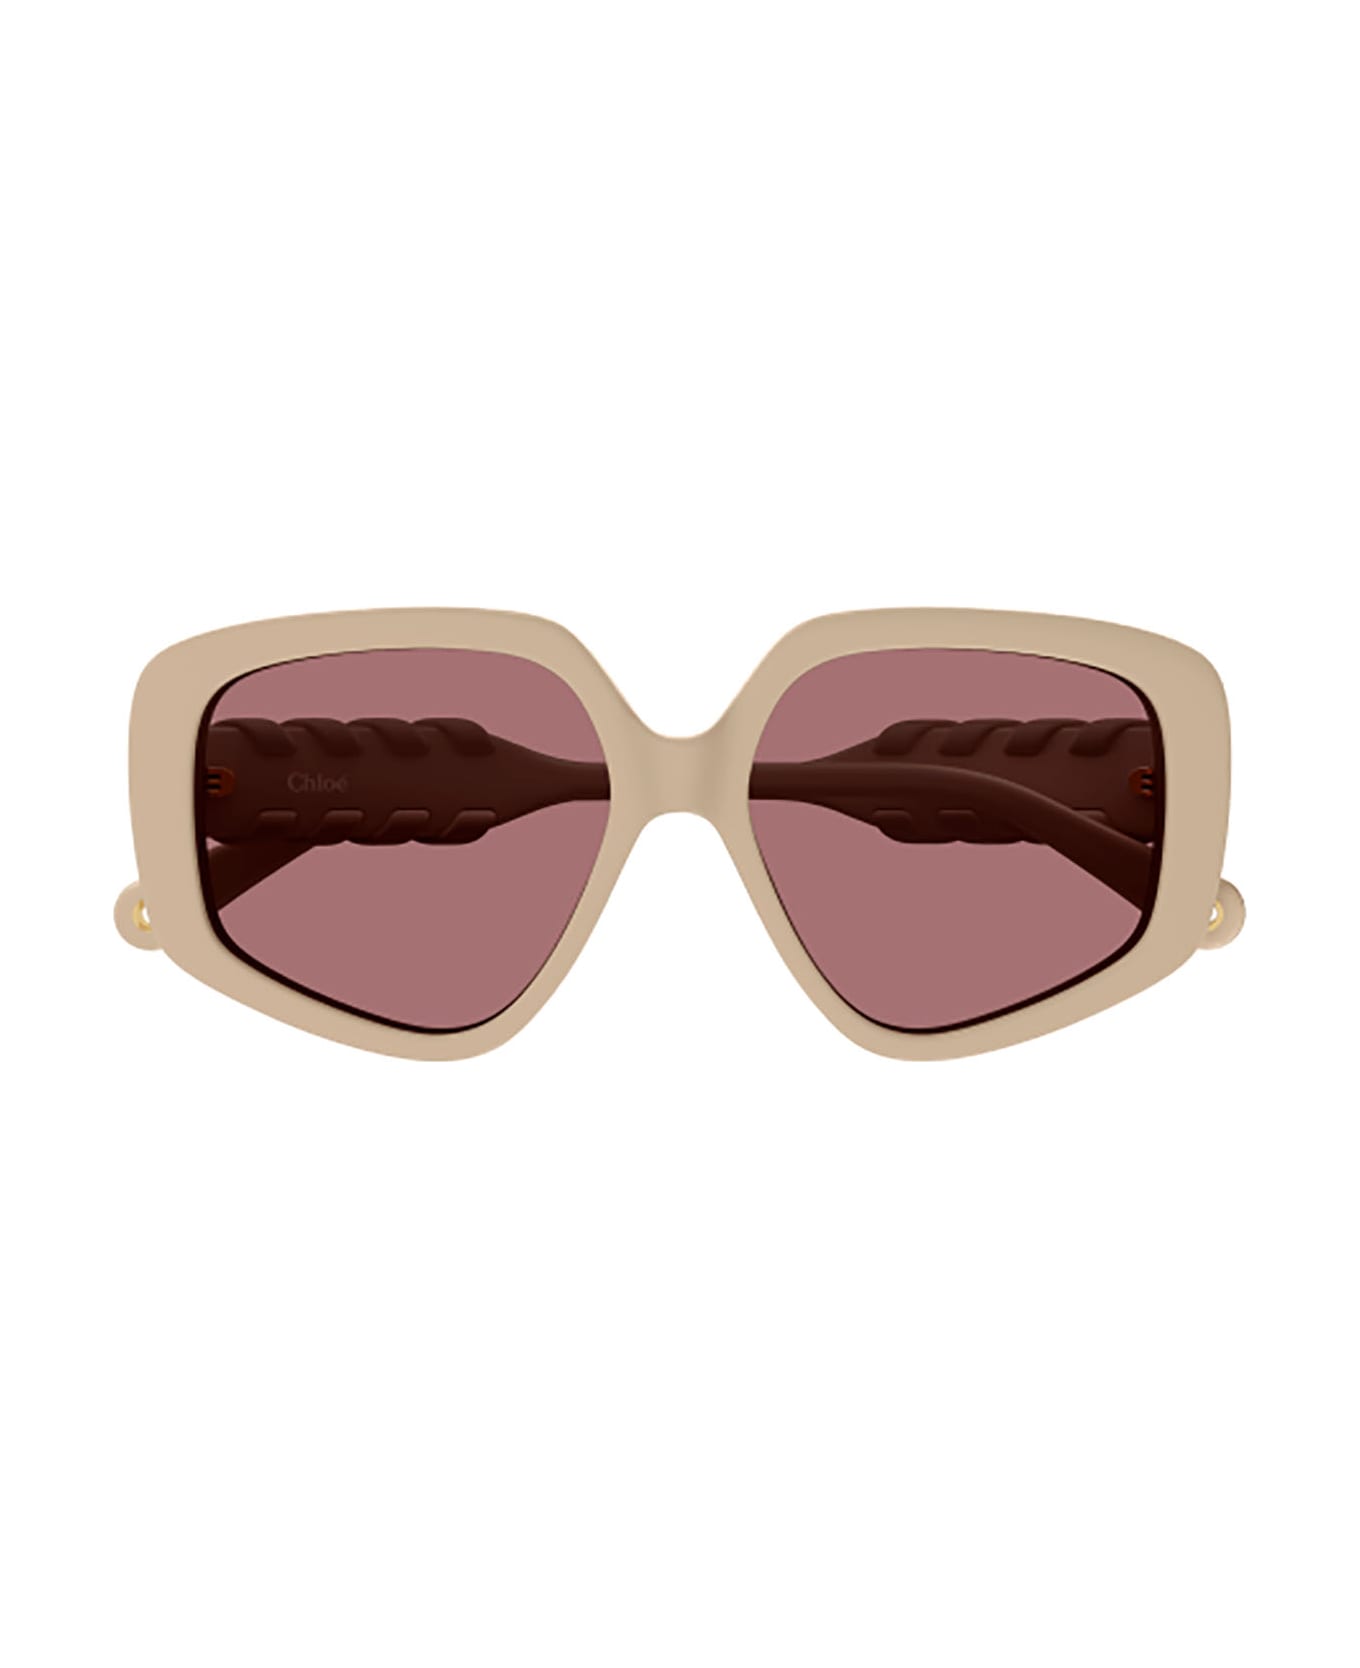 Chloé Eyewear CH0210S Sunglasses Square - Ivory Ivory Red